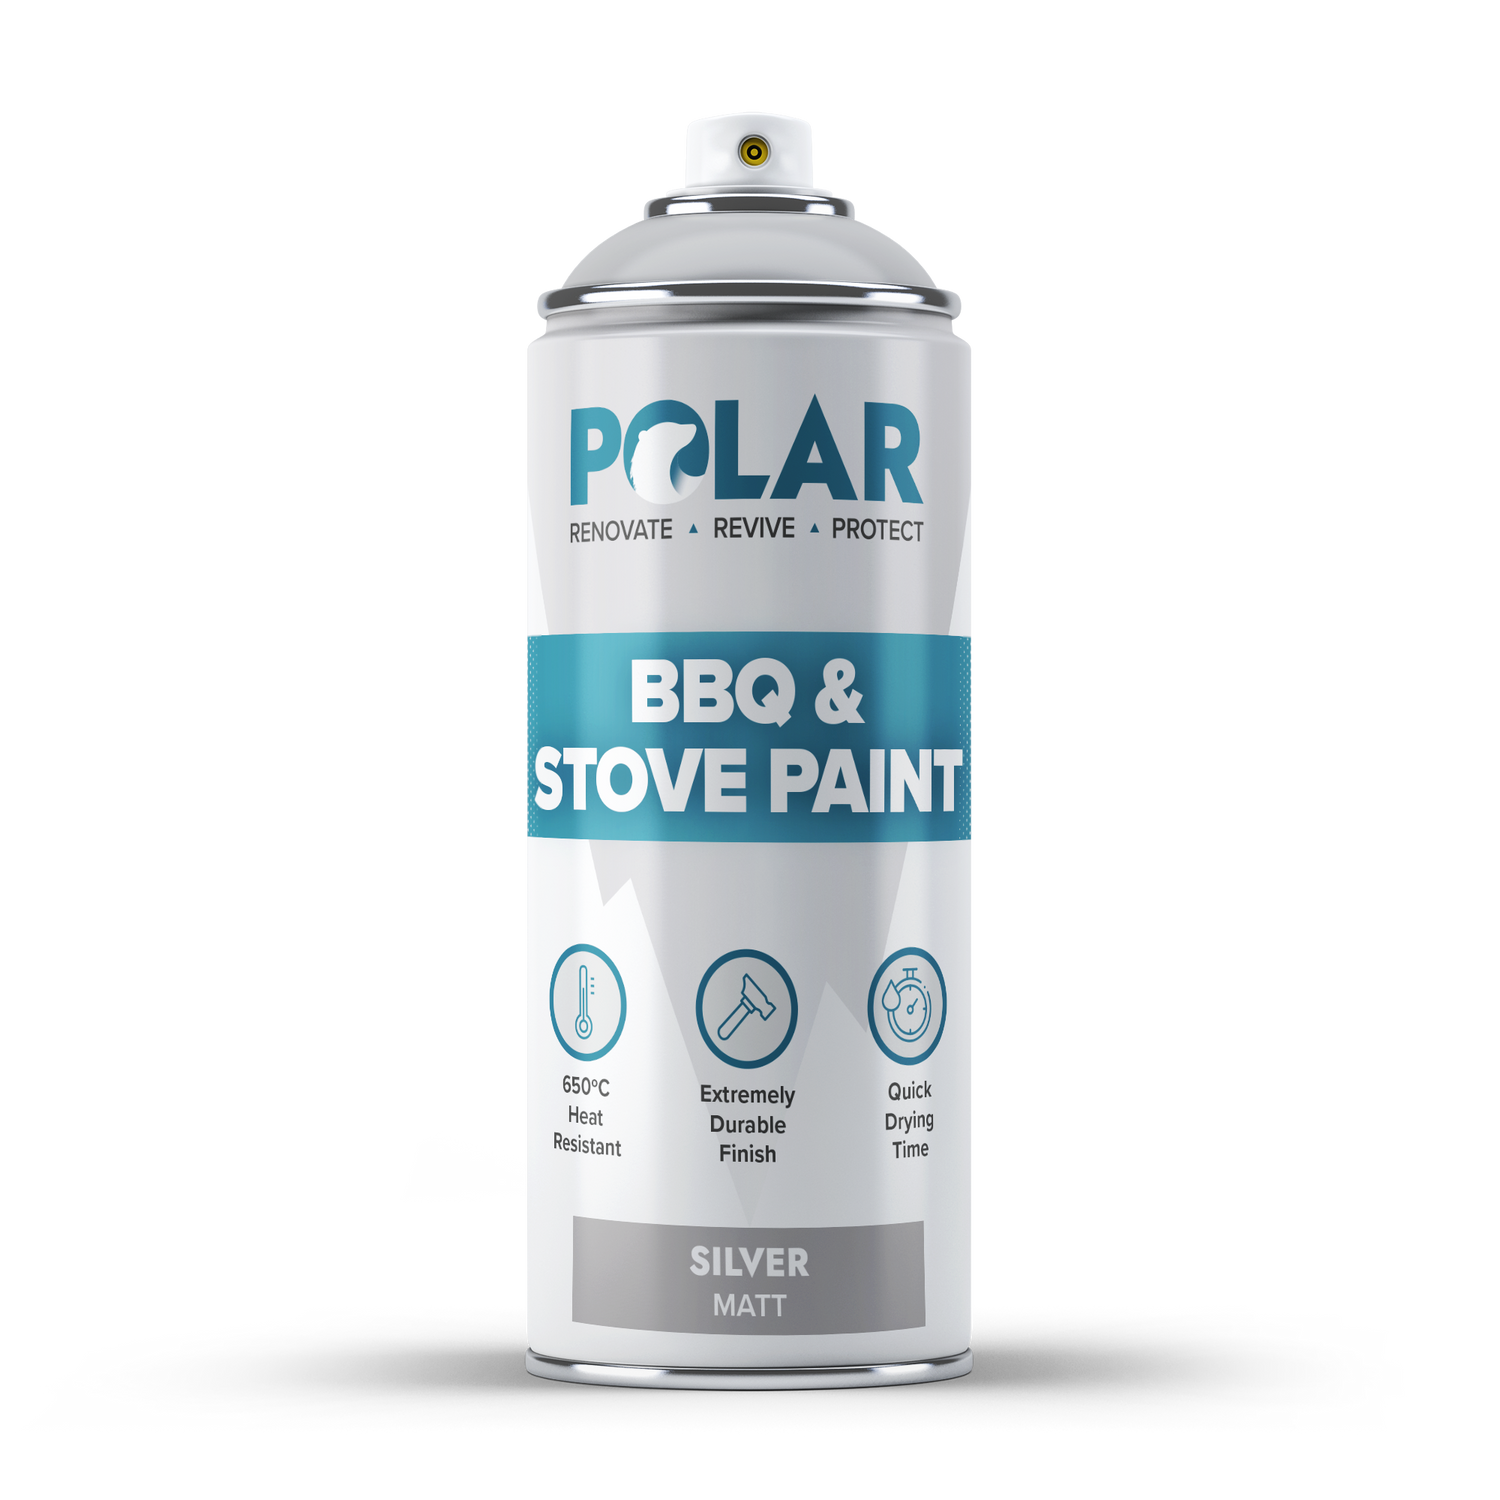 heat resistant paint for bbq